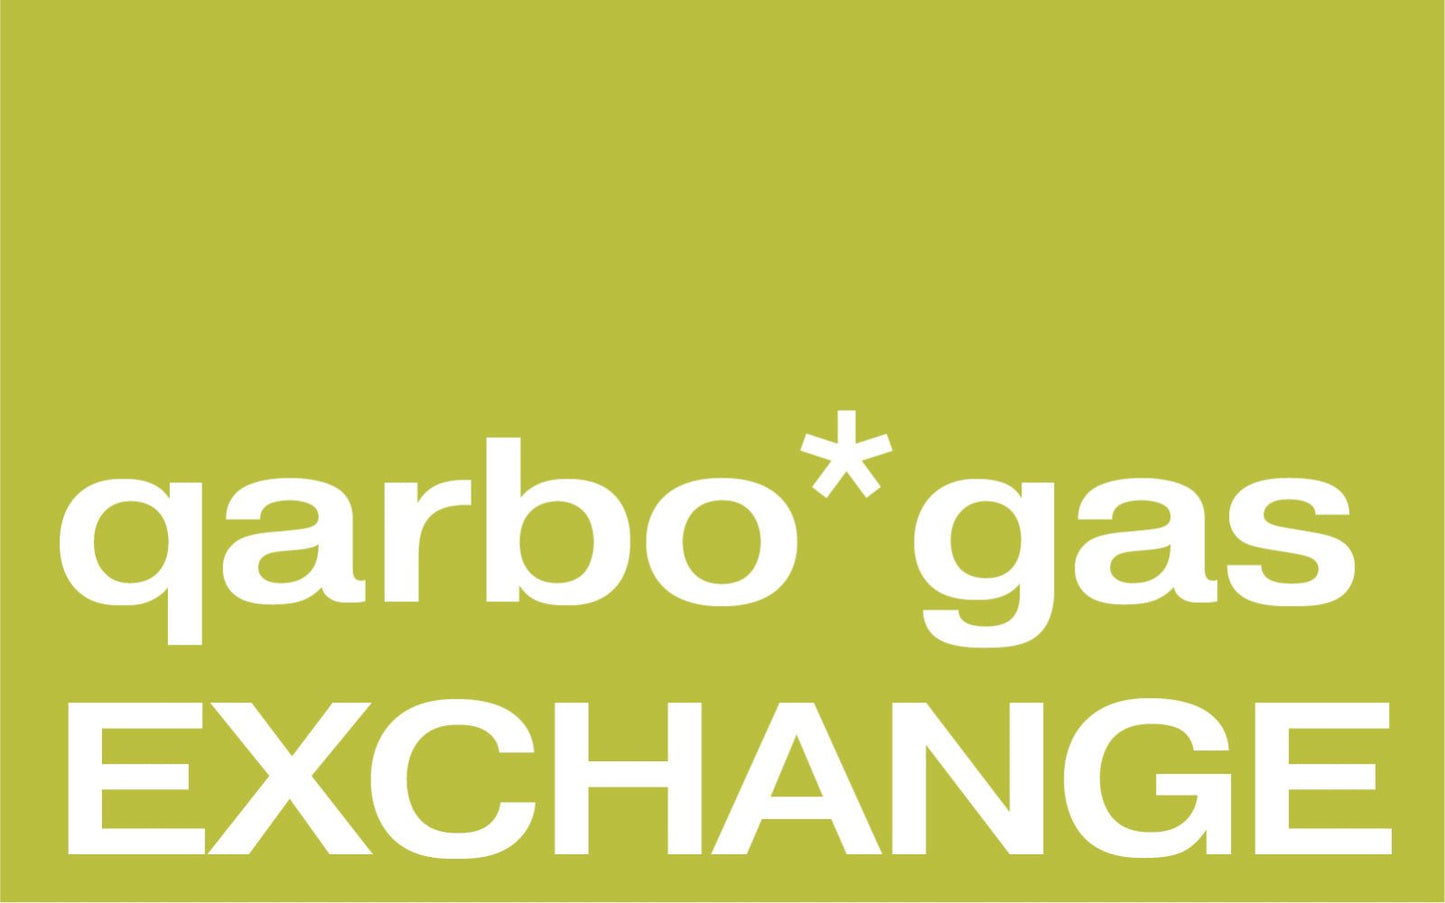 qarbo*gas - 60L CO2 Cylinder Refills - Home Exchange Program - Twenty-39